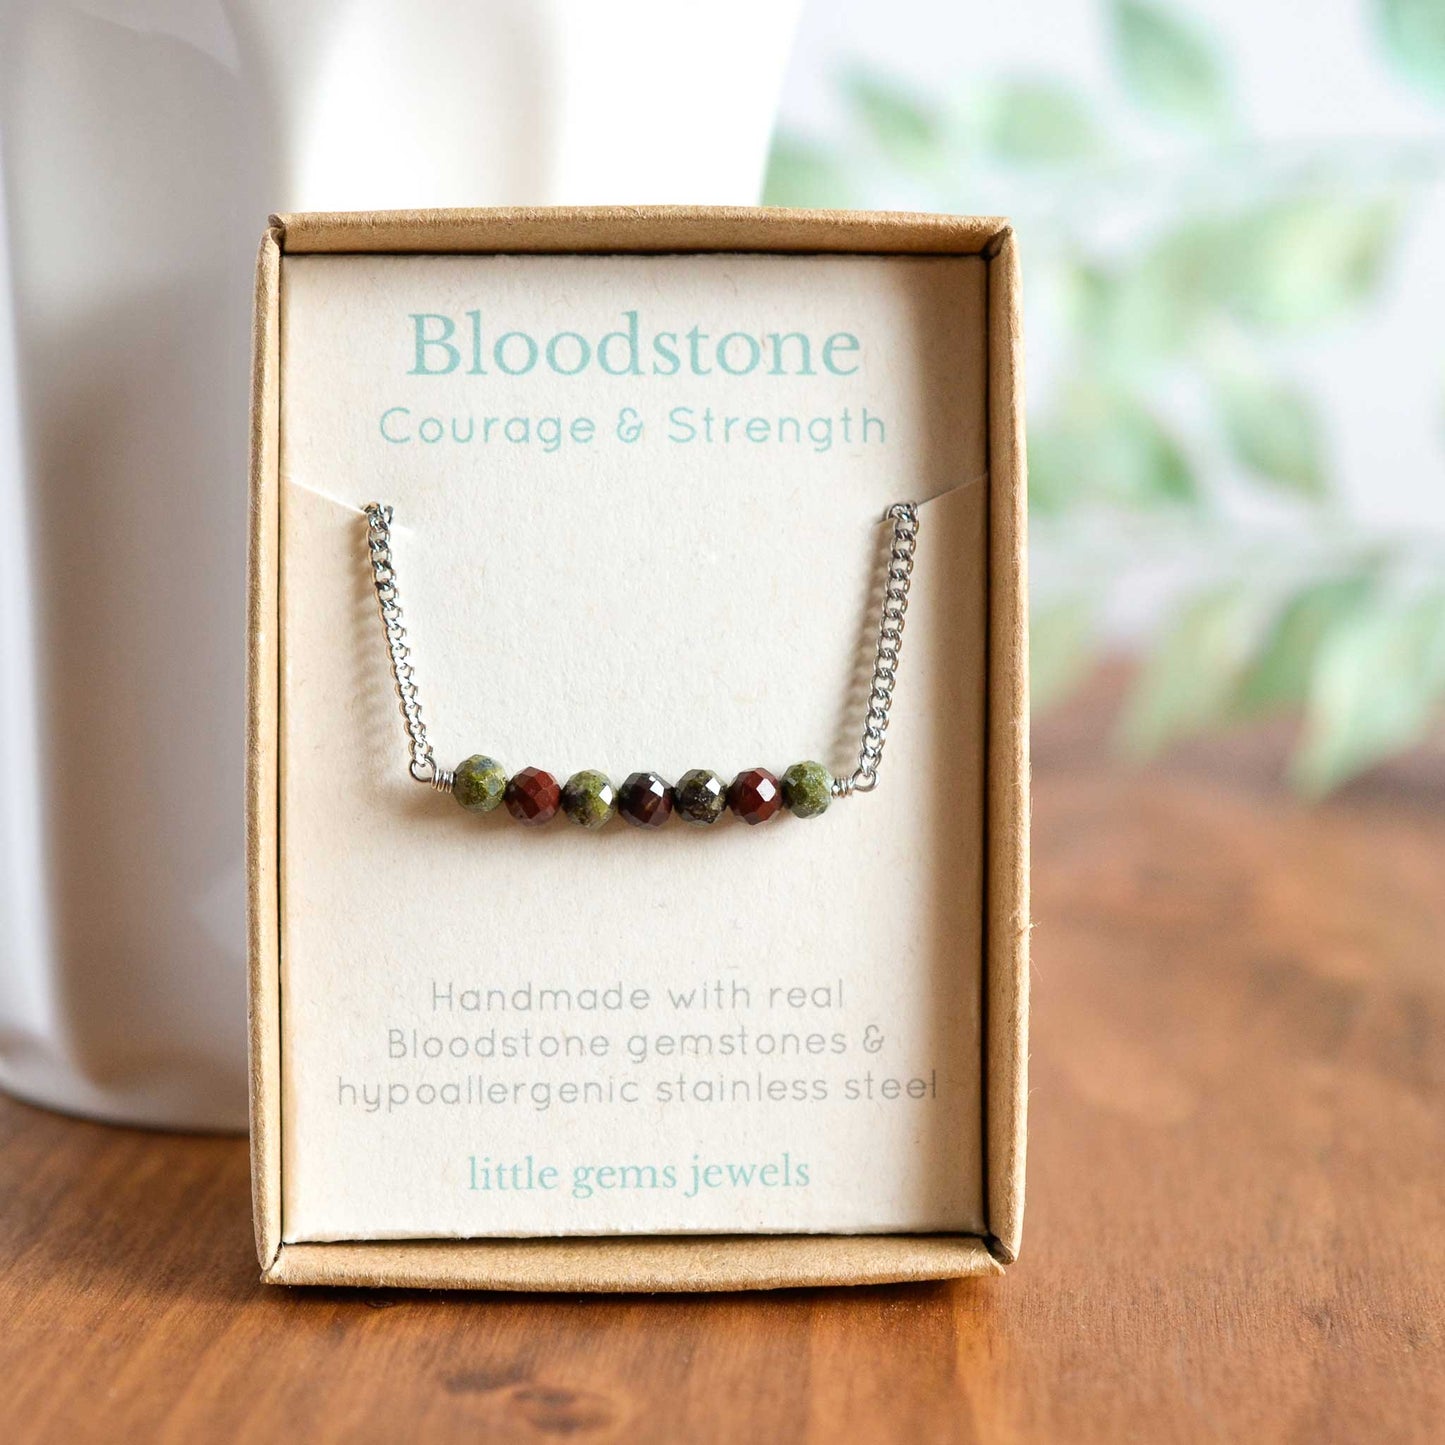 Bloodstone gemstone necklace in eco friendly gift box